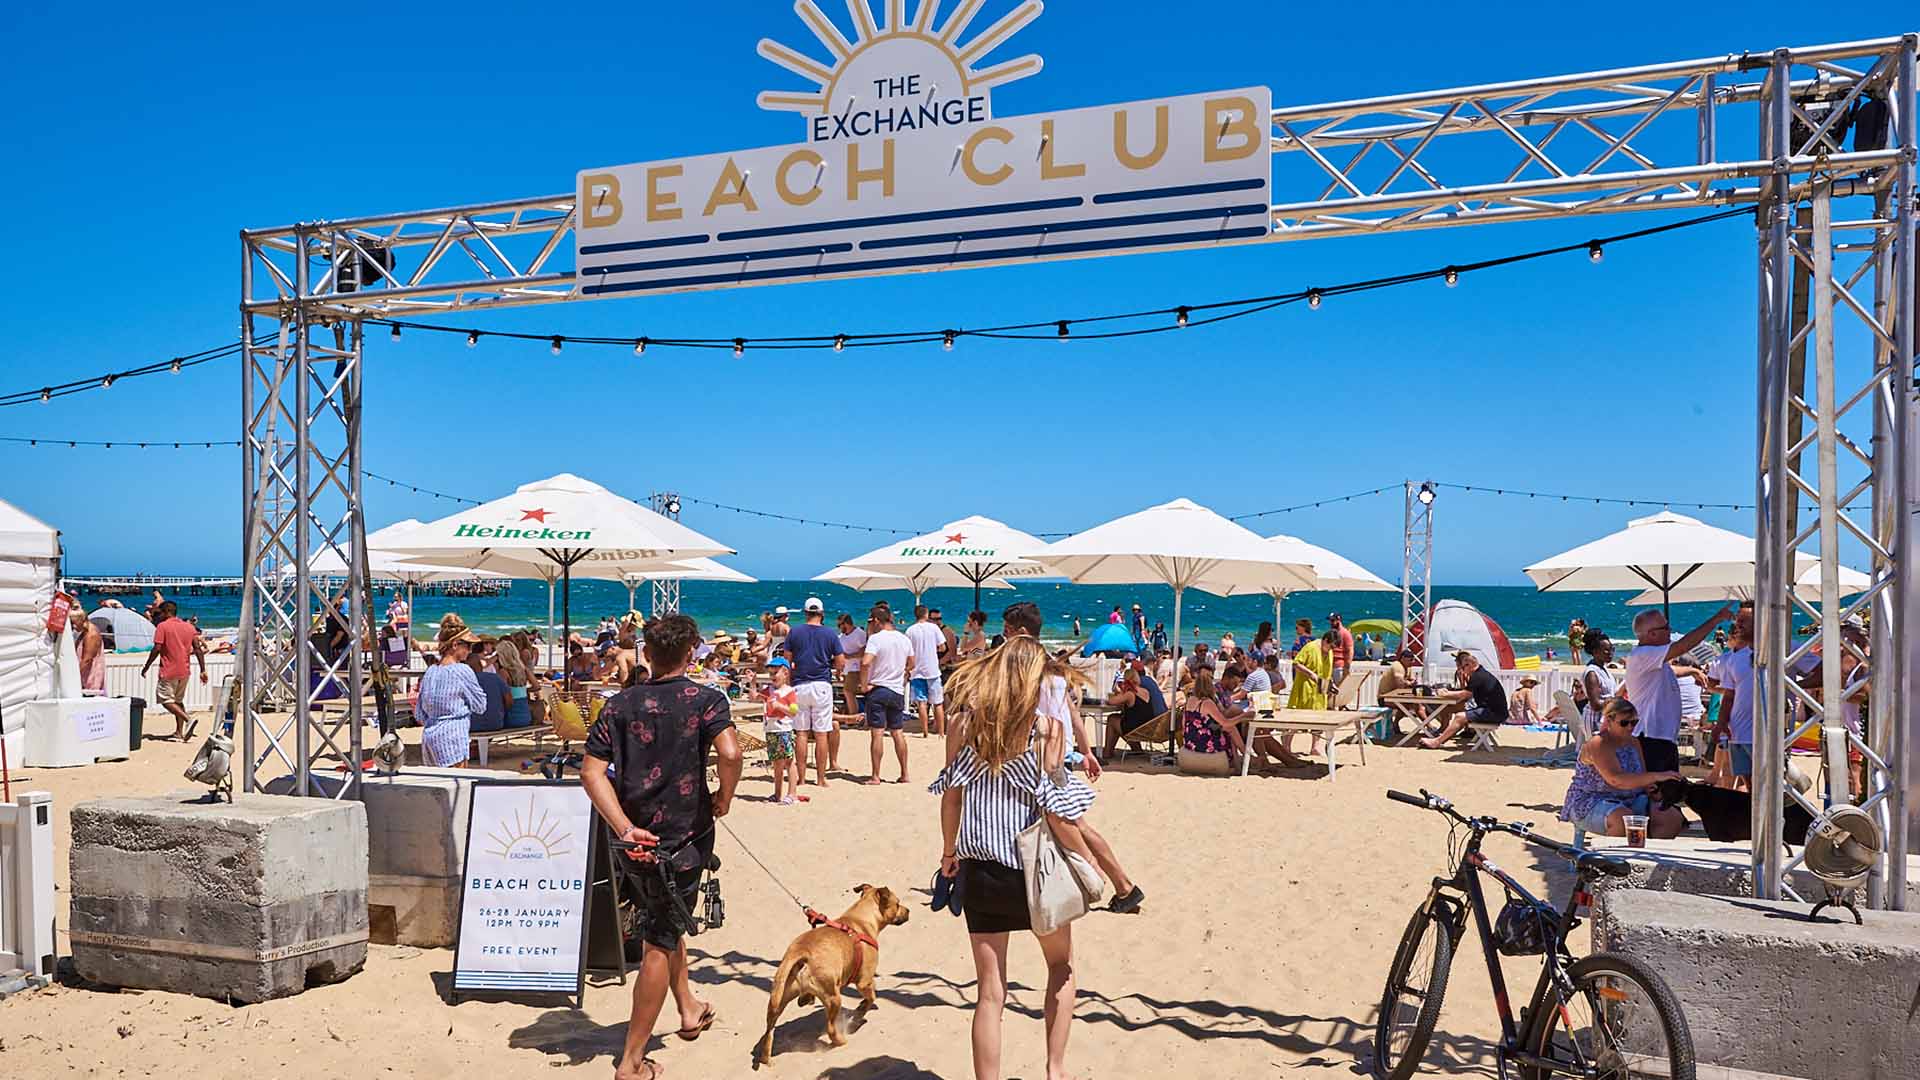 The Exchange Beach Club 2021–22